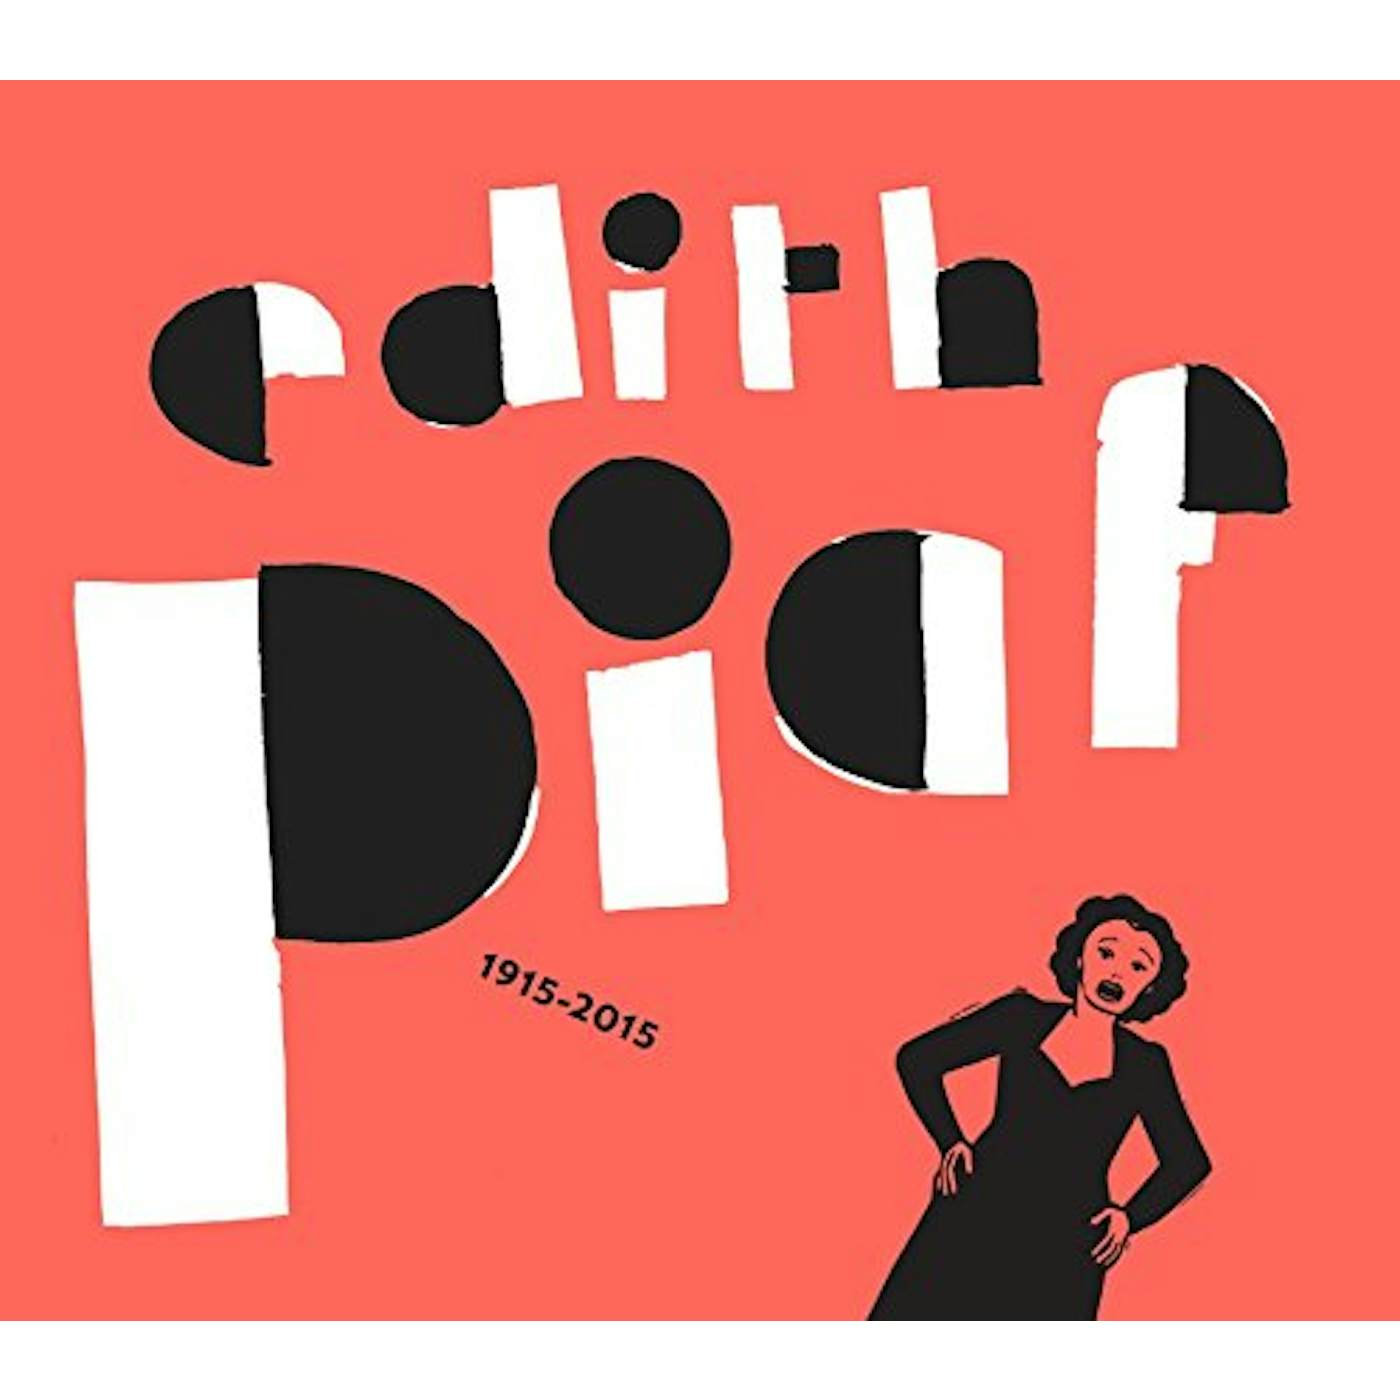 Édith Piaf INTEGRALE 2015 BOX SET CD